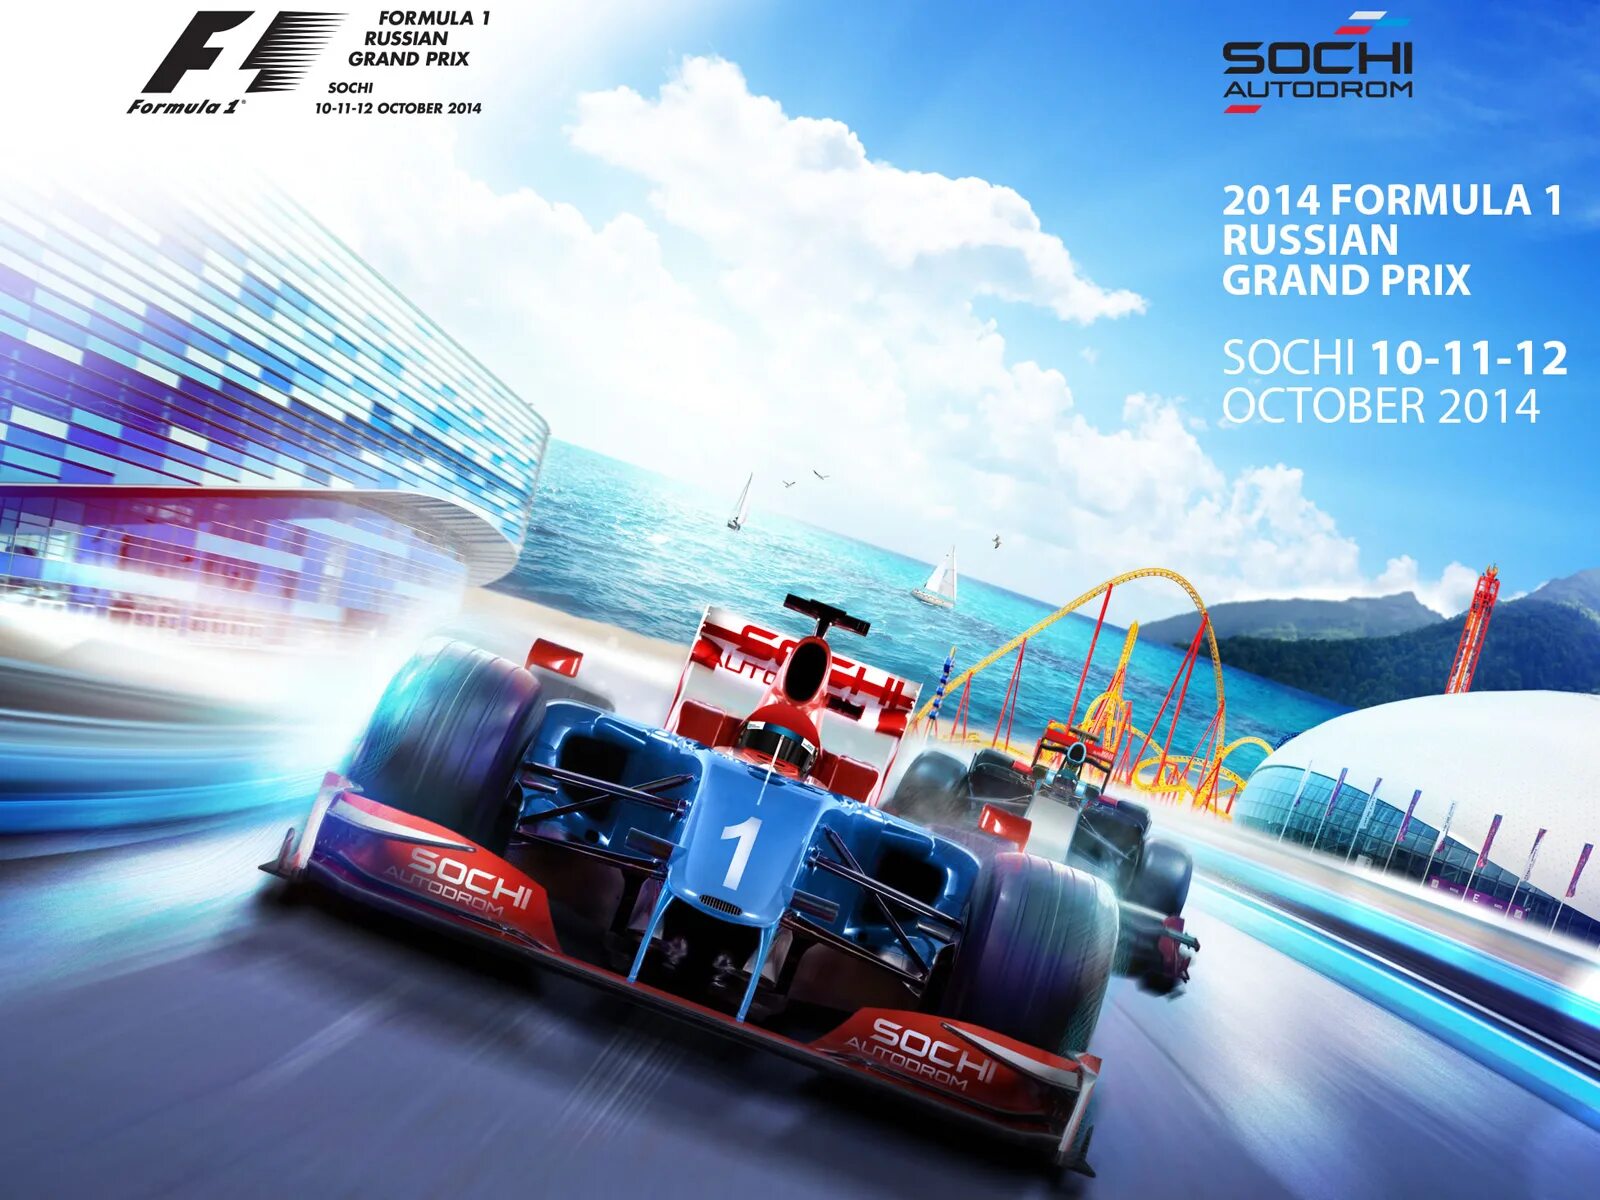 Формула 1 реклама. Формула 1 Сочи 2014. Реклама на автогонках. Формула 1 Сочи логотип.